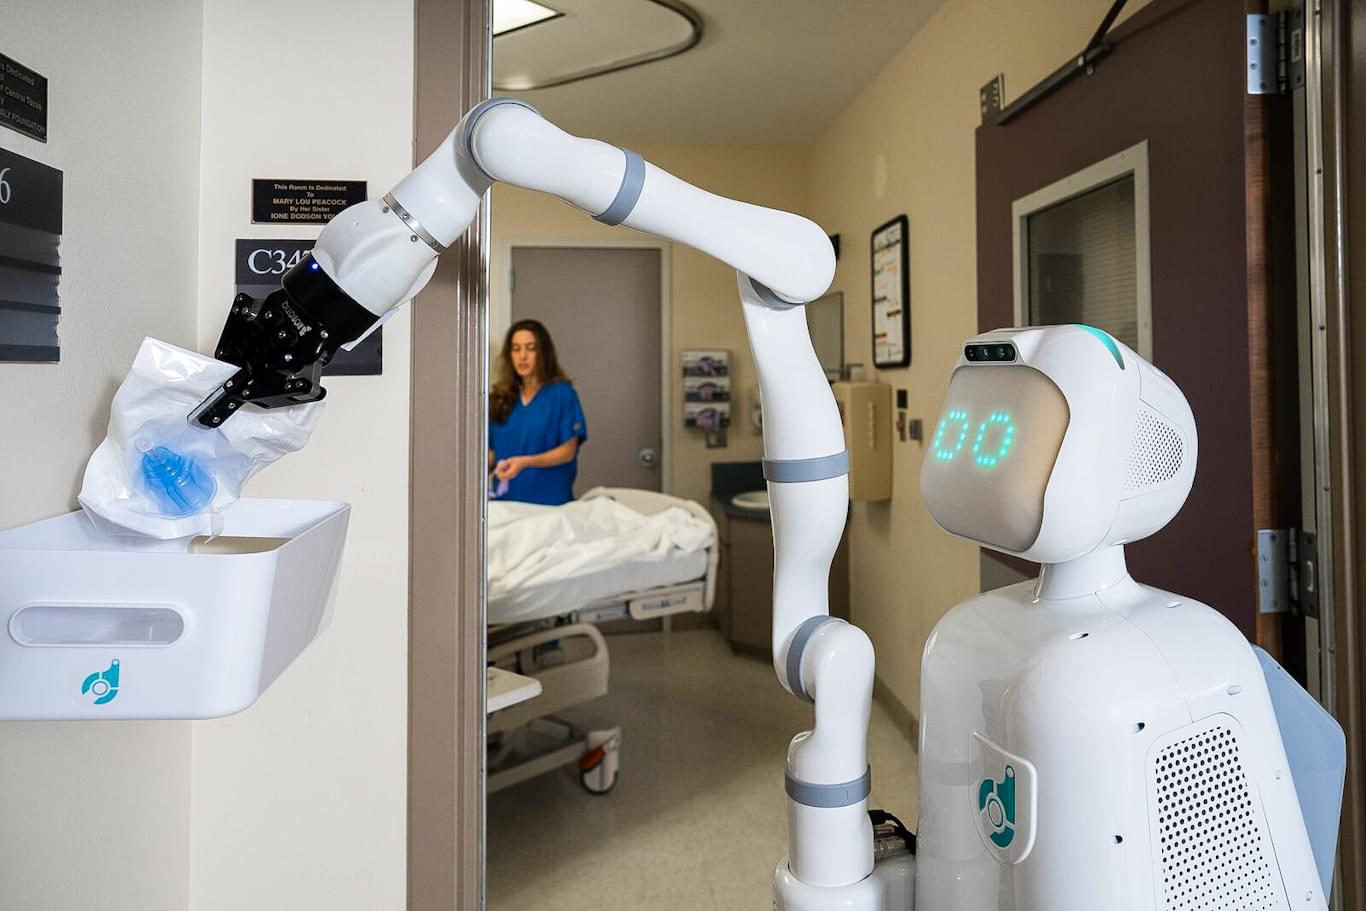 Robots In Healthcare: Creepy Dolls, Or Social - ICT&health